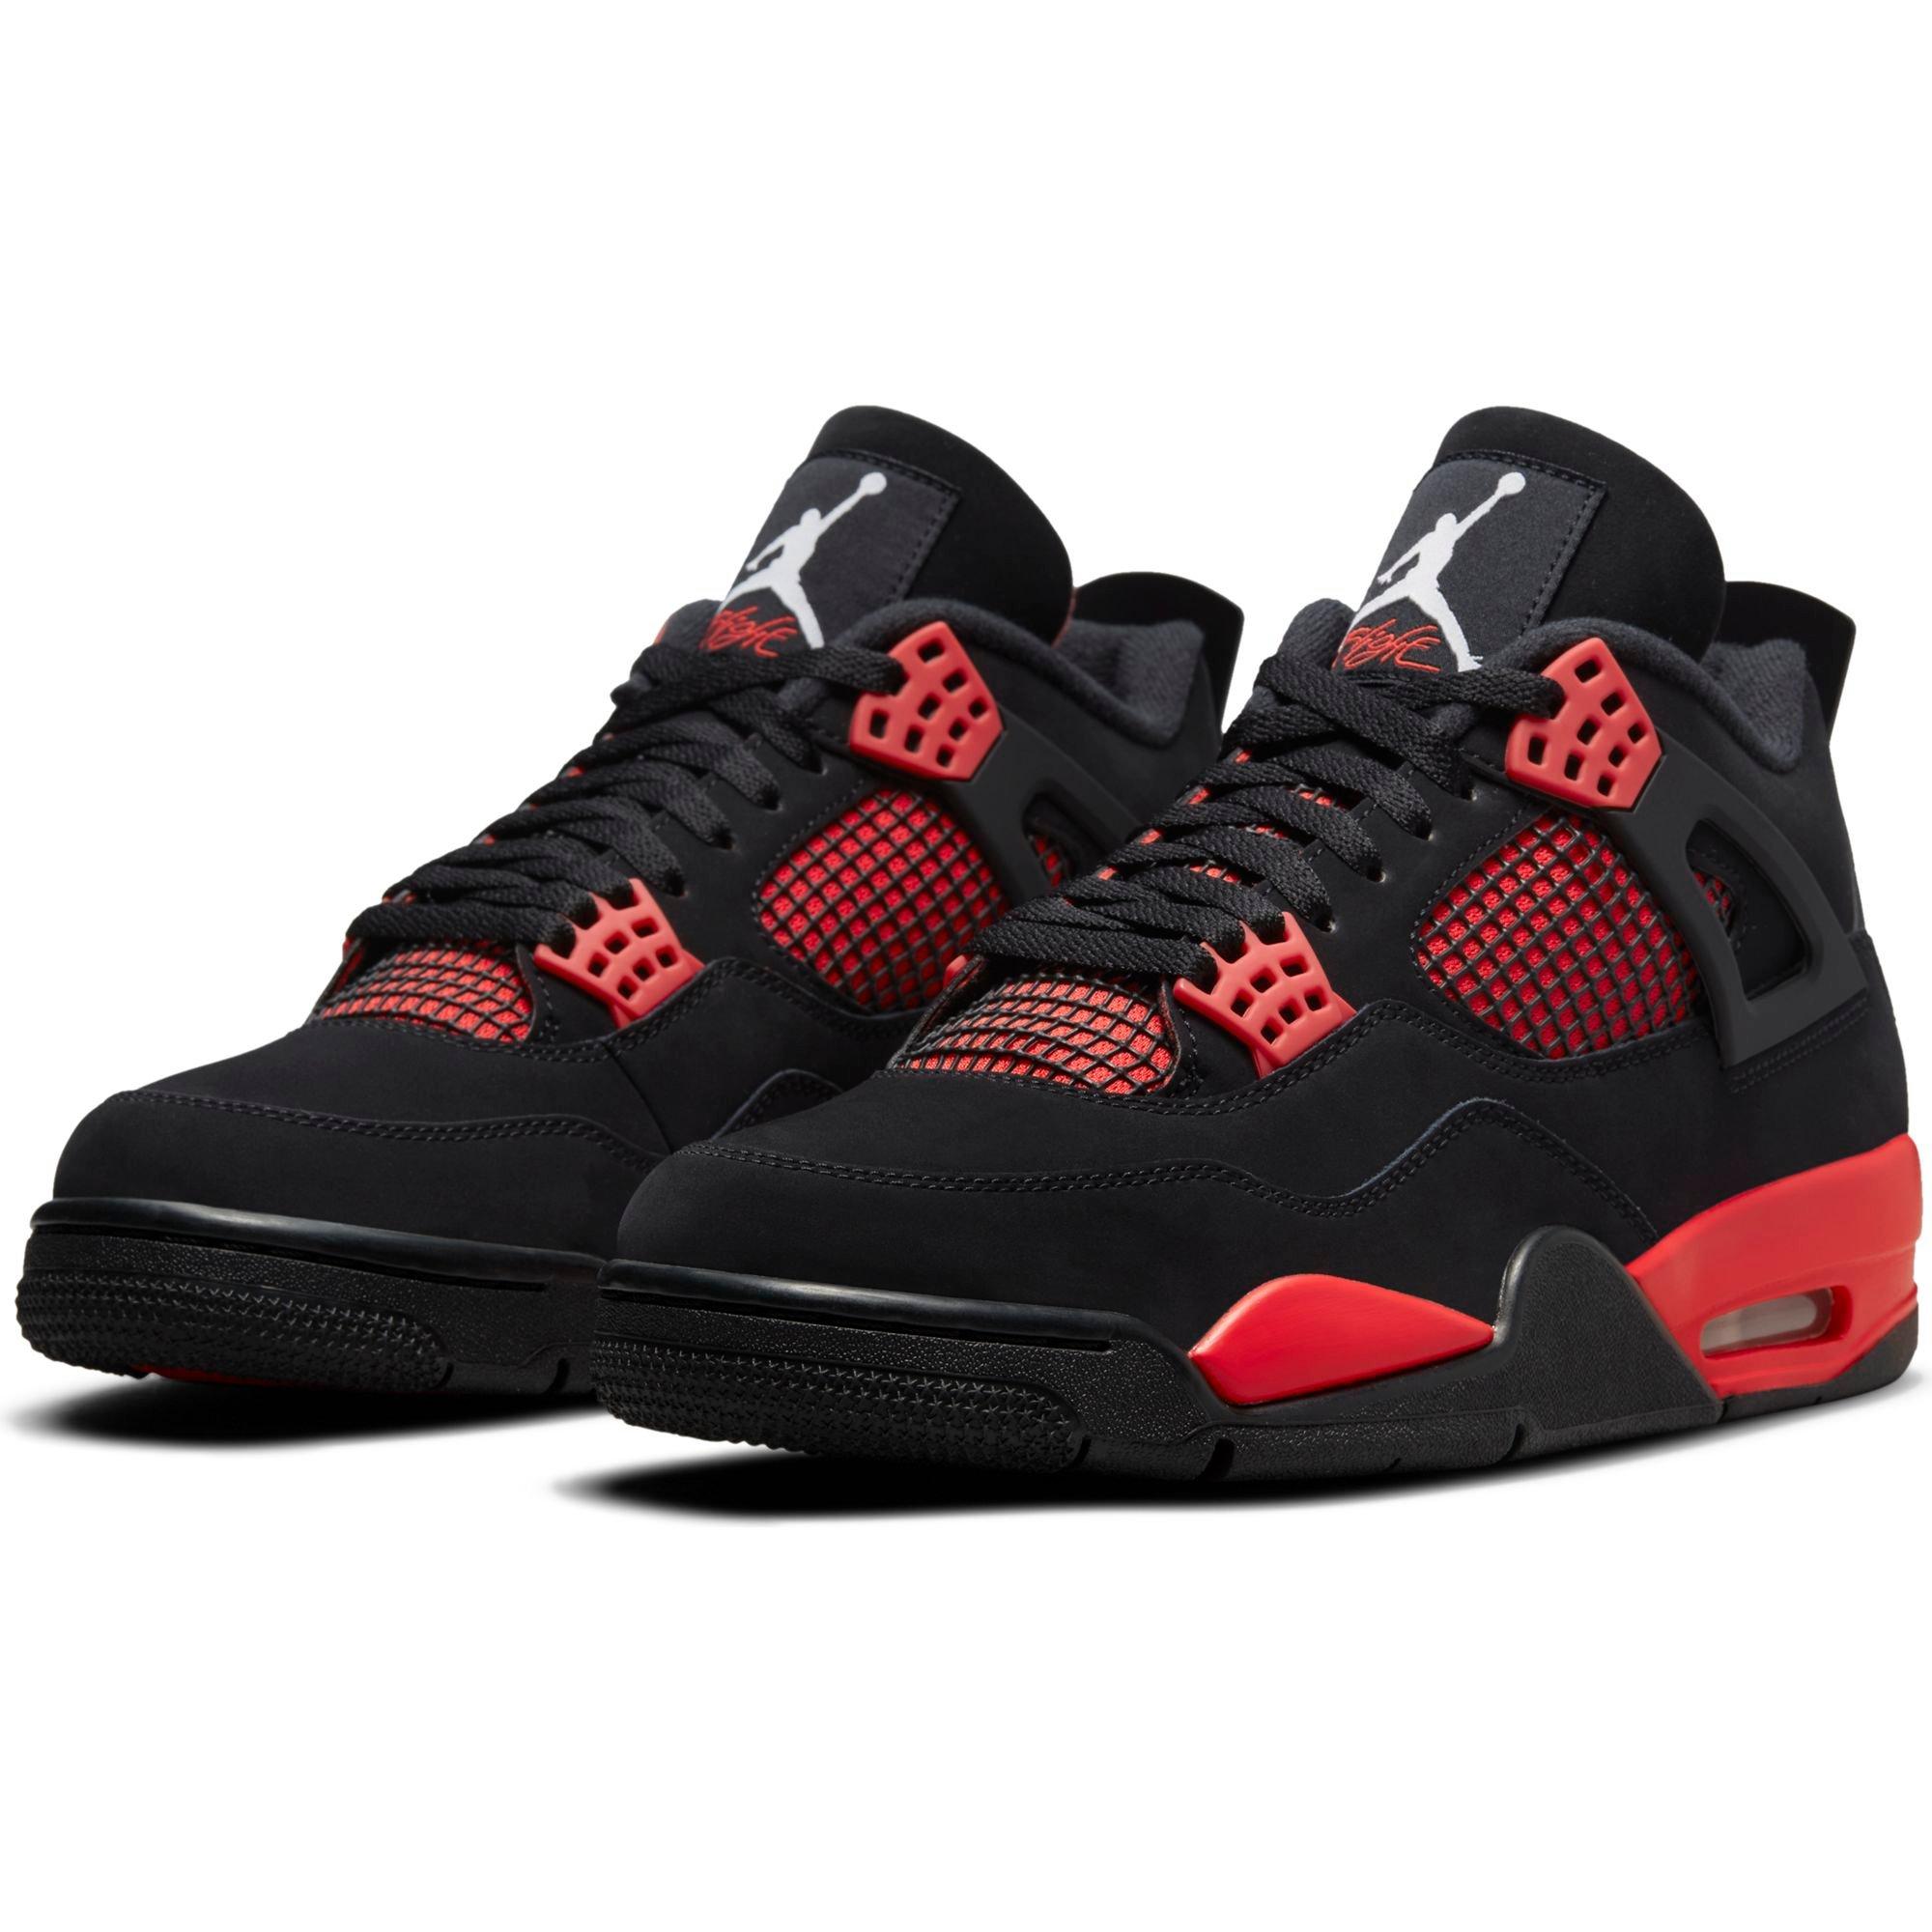 Air Jordan 4 “Custom Breds” By @chefhuyle 🔥🔥 Would you rock